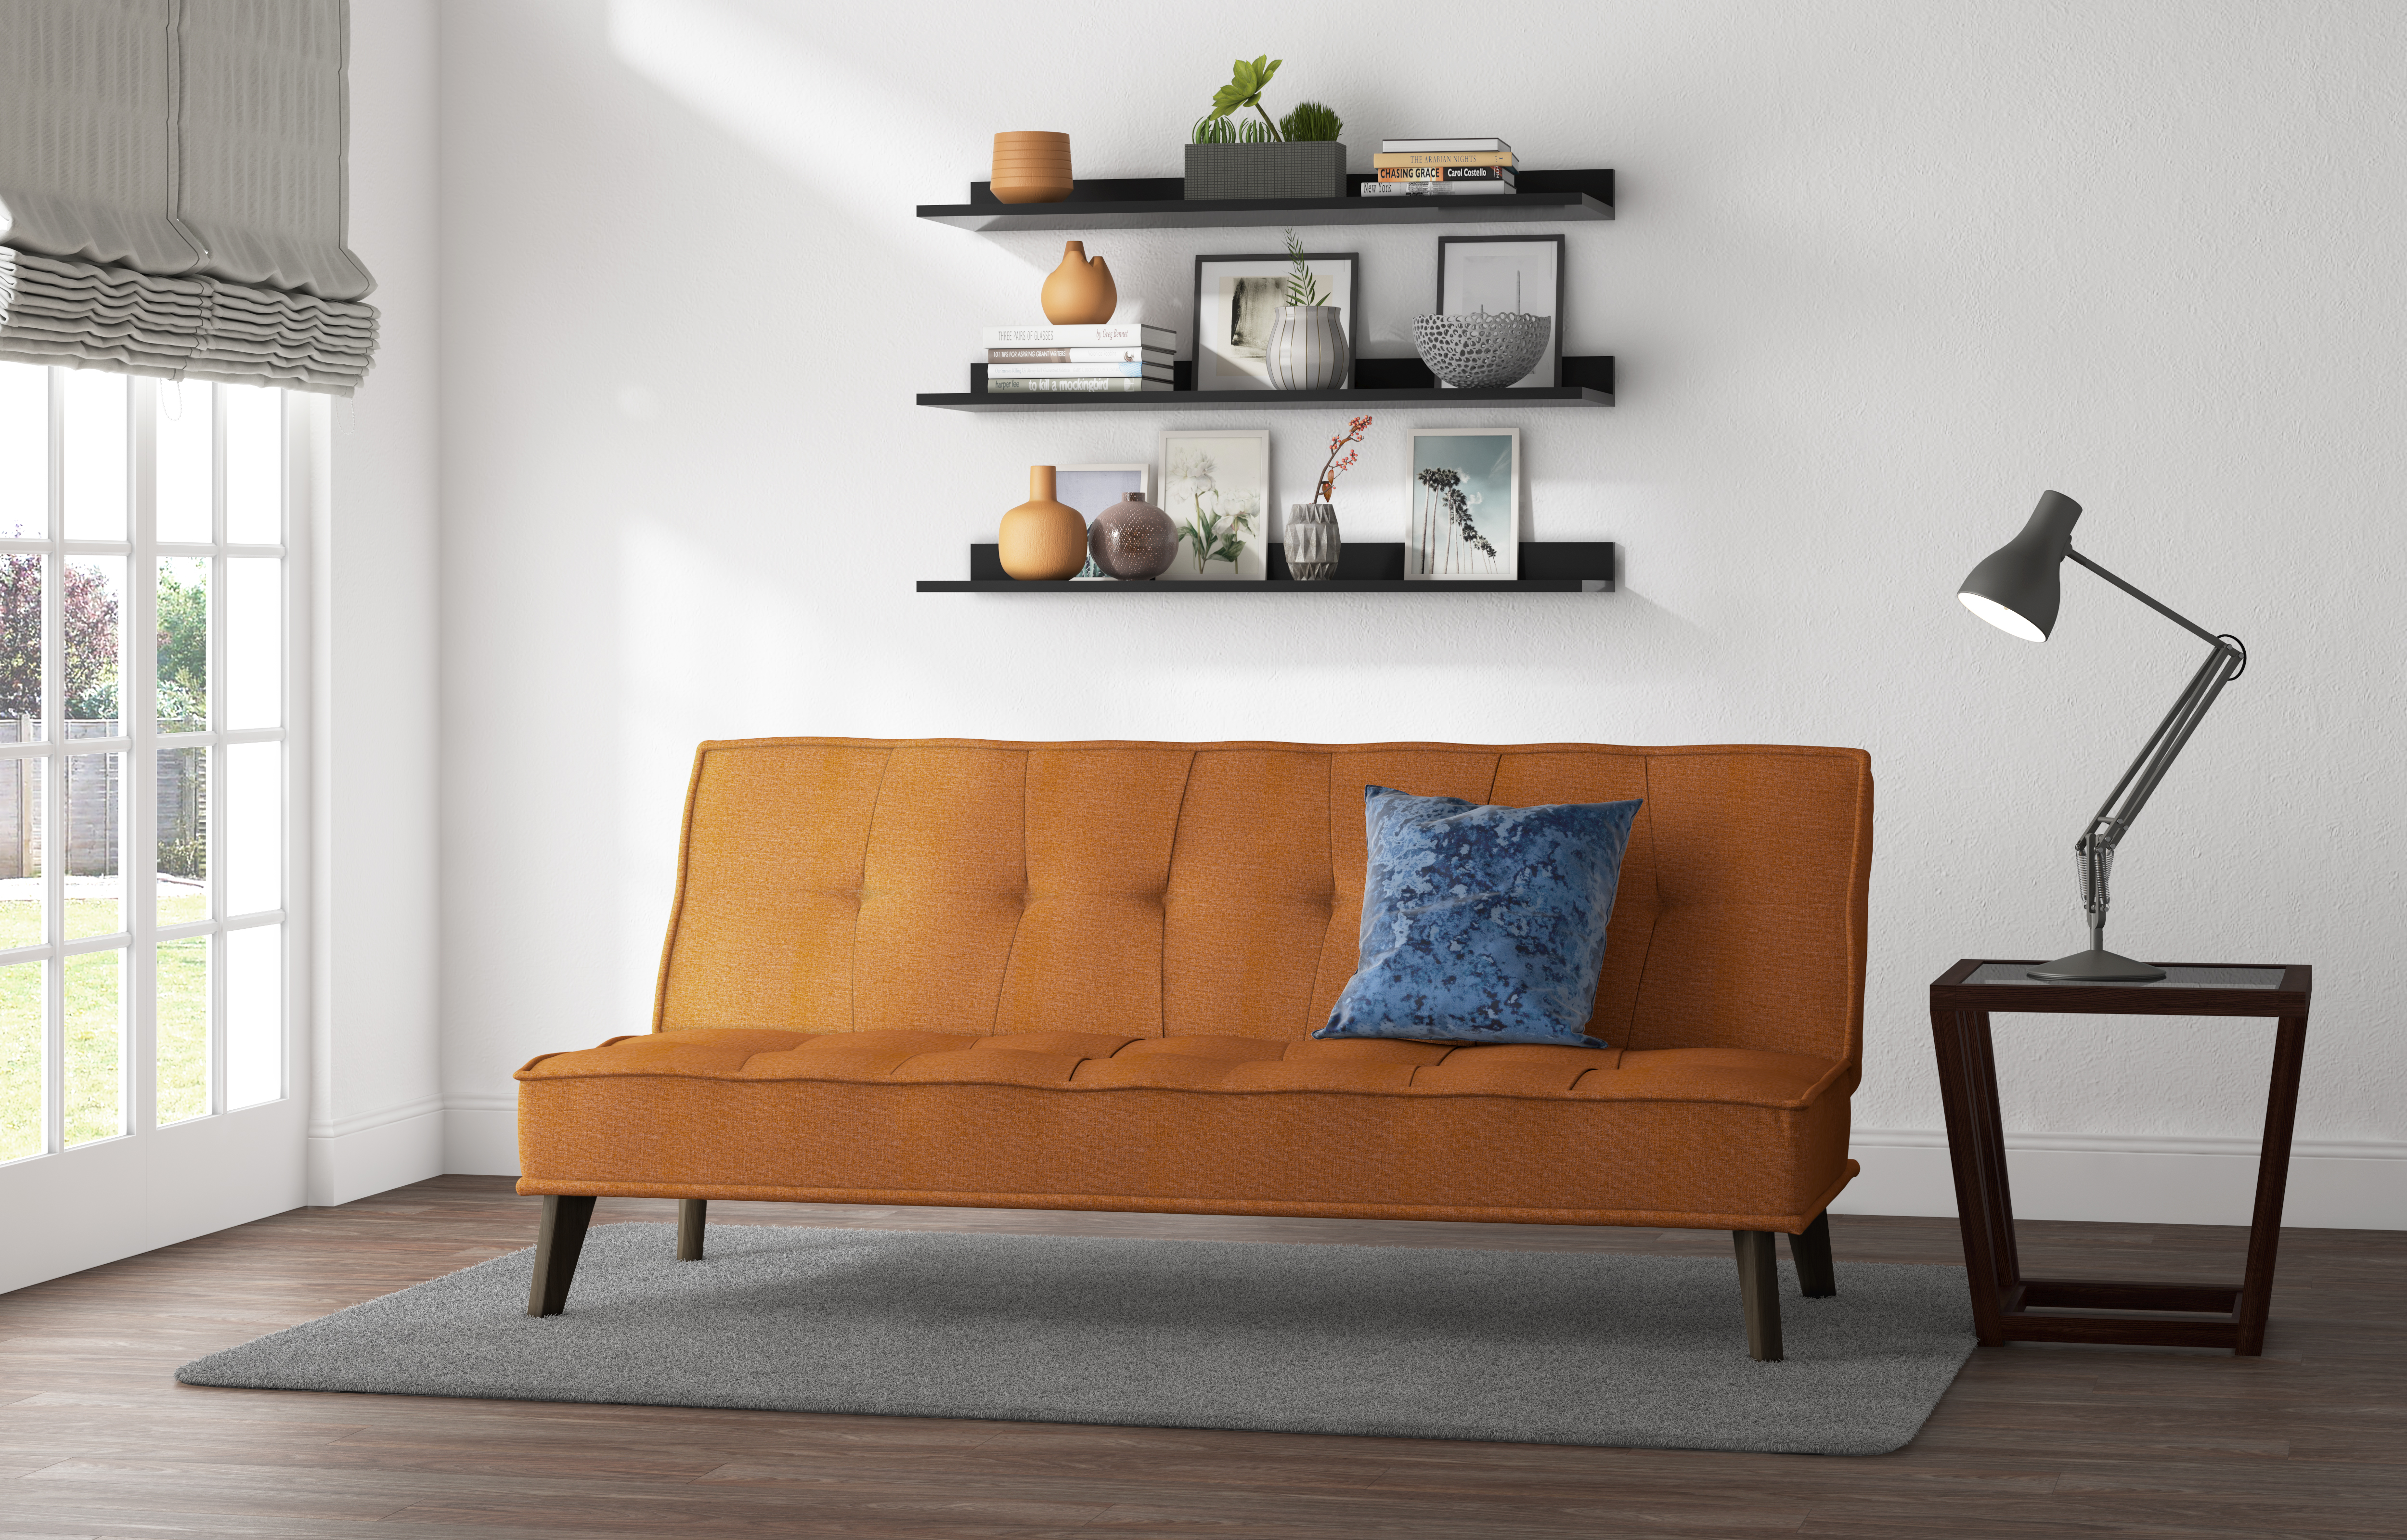 The Cassia 3-seater sofa bed in orange